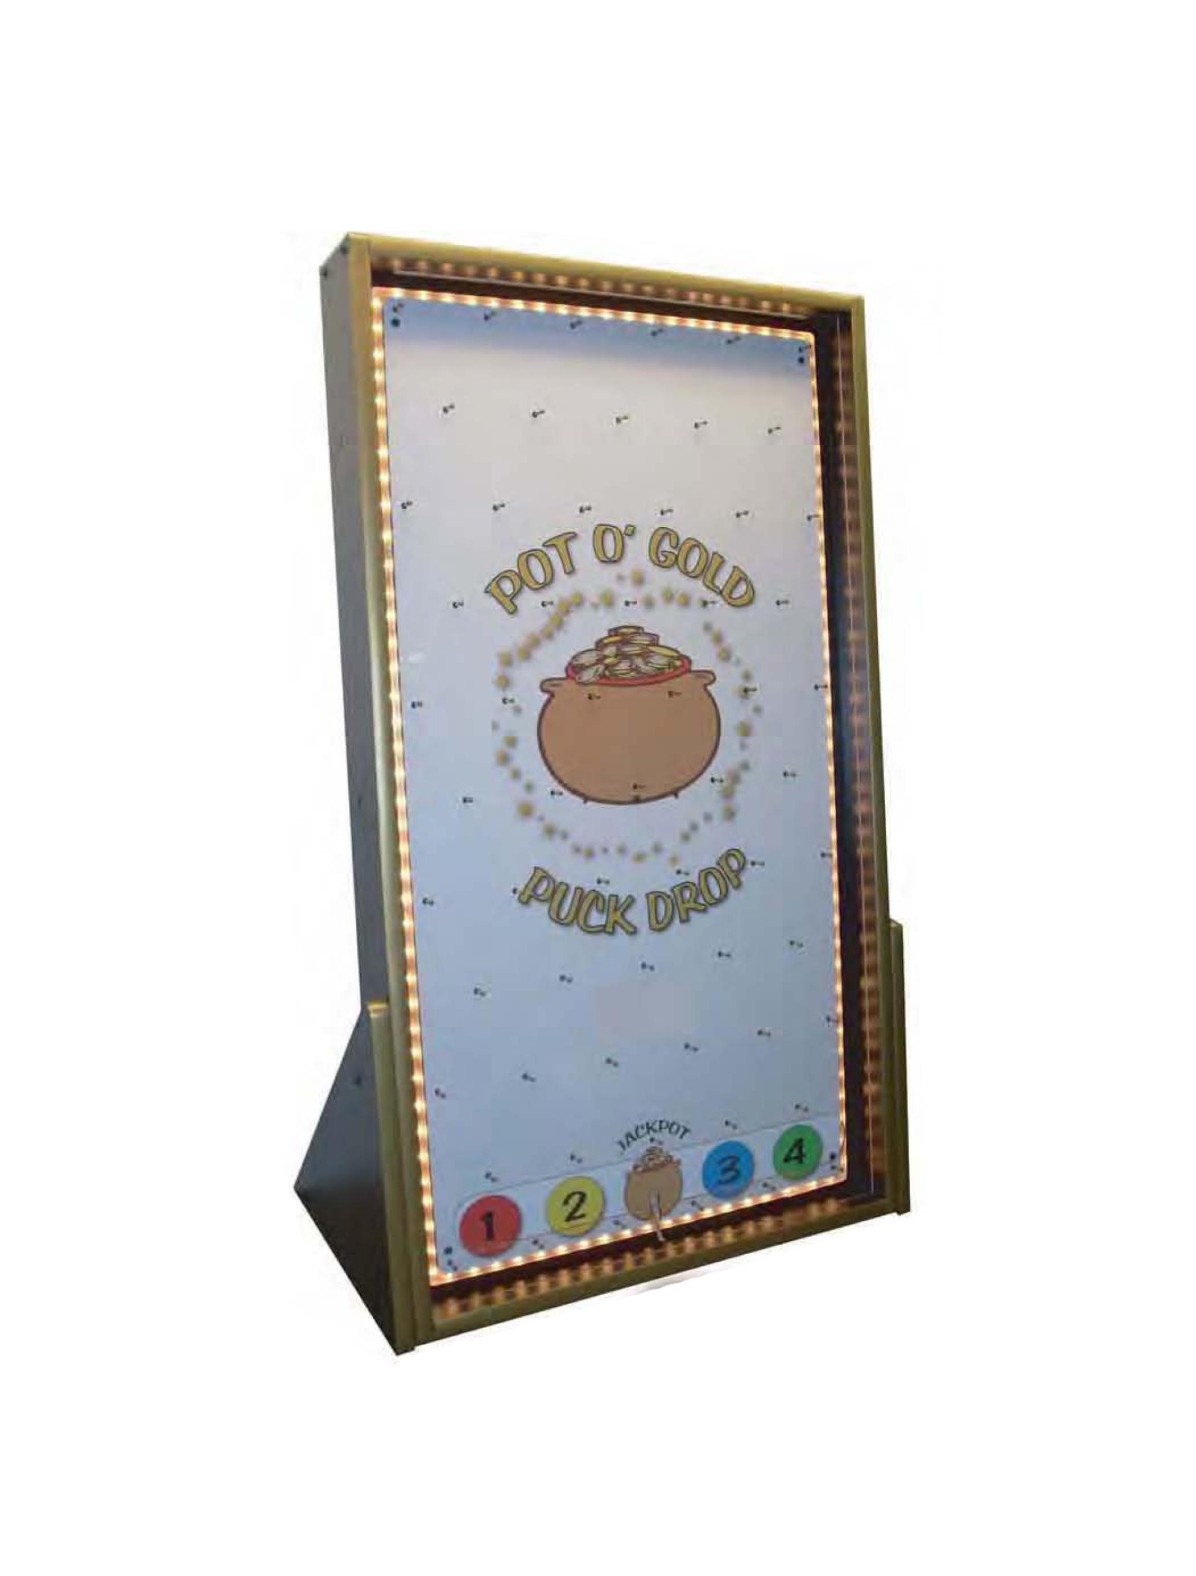 Plinko Pot O'Gold Puck Drop | Plinko Board Game